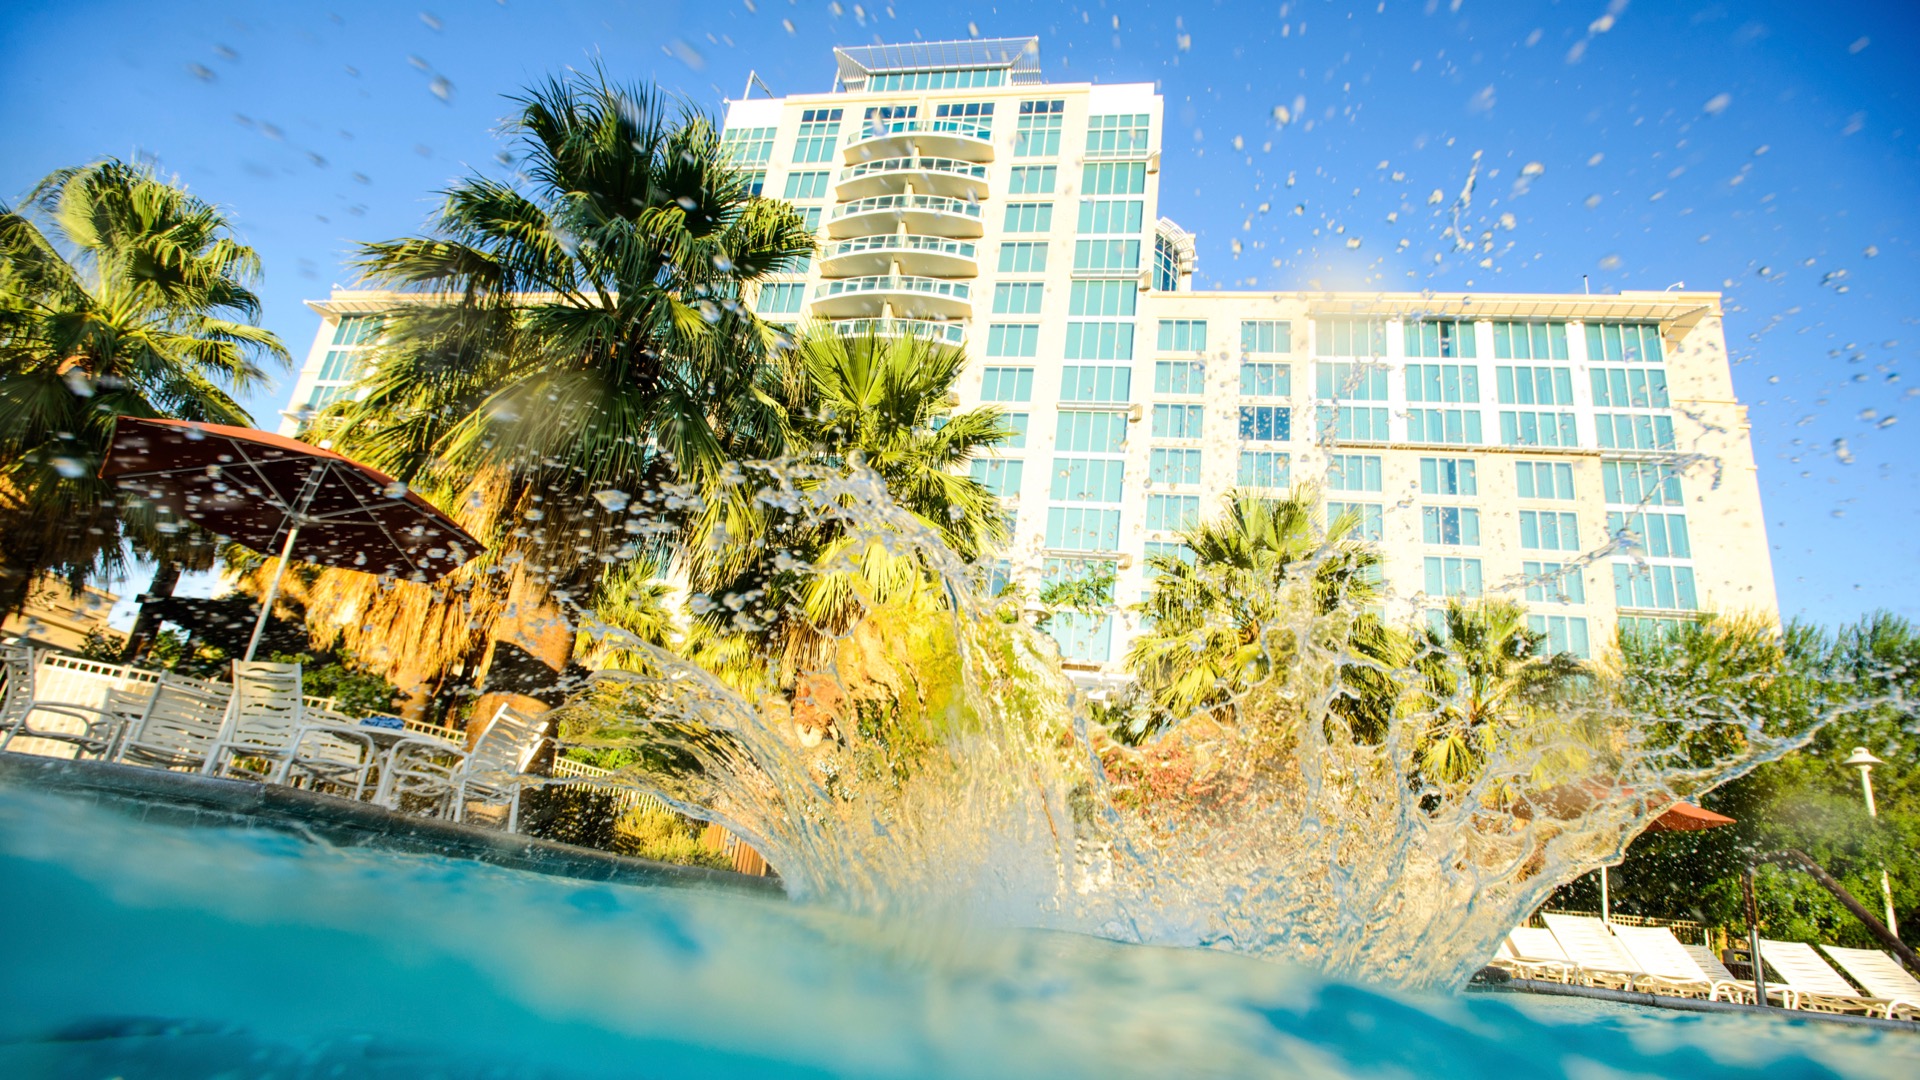 Sunstone, The Spa at Agua Caliente Casino Resort & Spa, Pool Splash, Spas of America